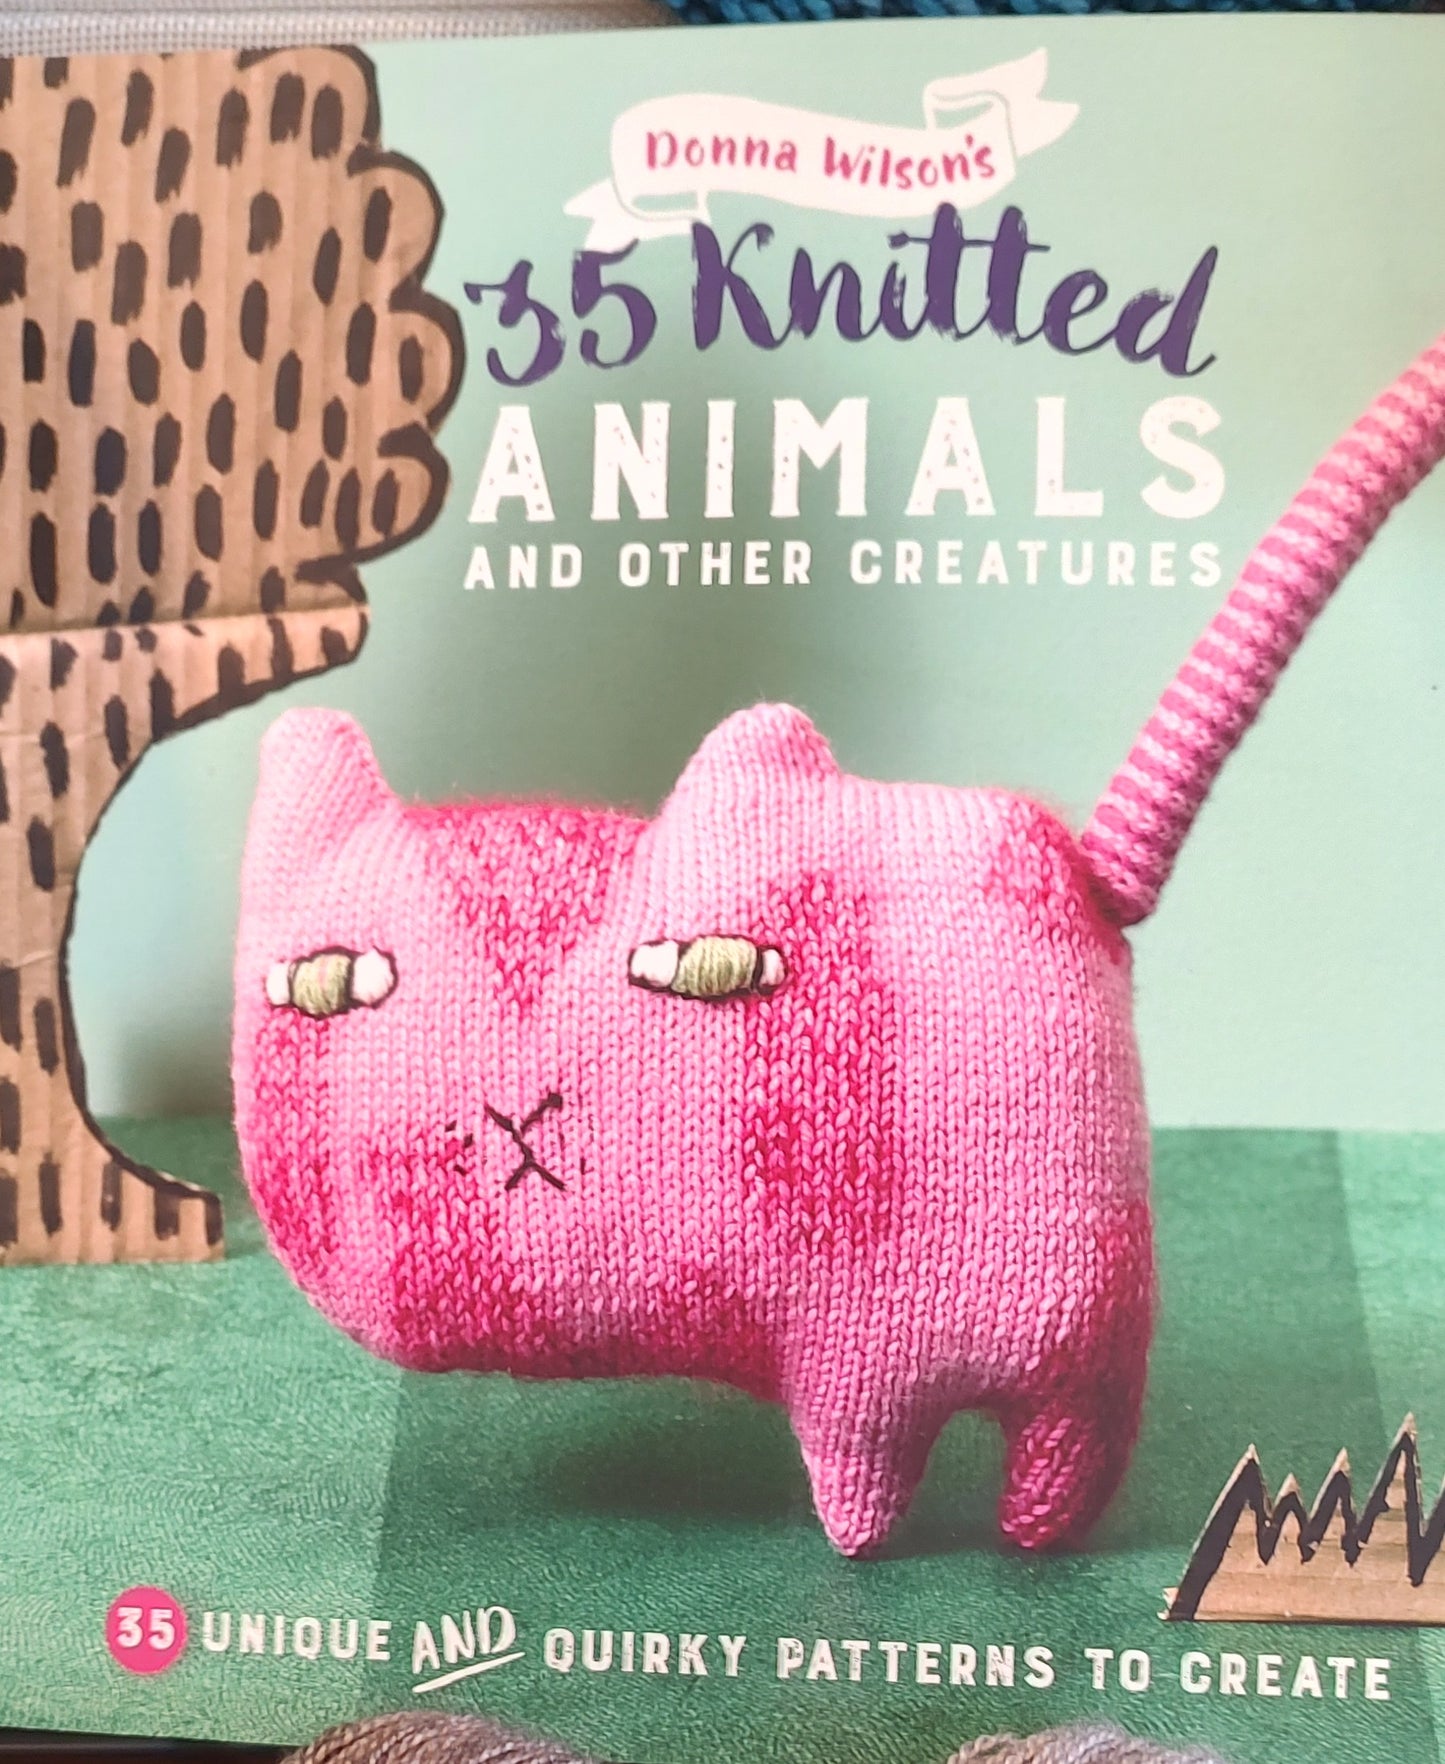 Book - Donna Wilson's 35 Knitted Animals